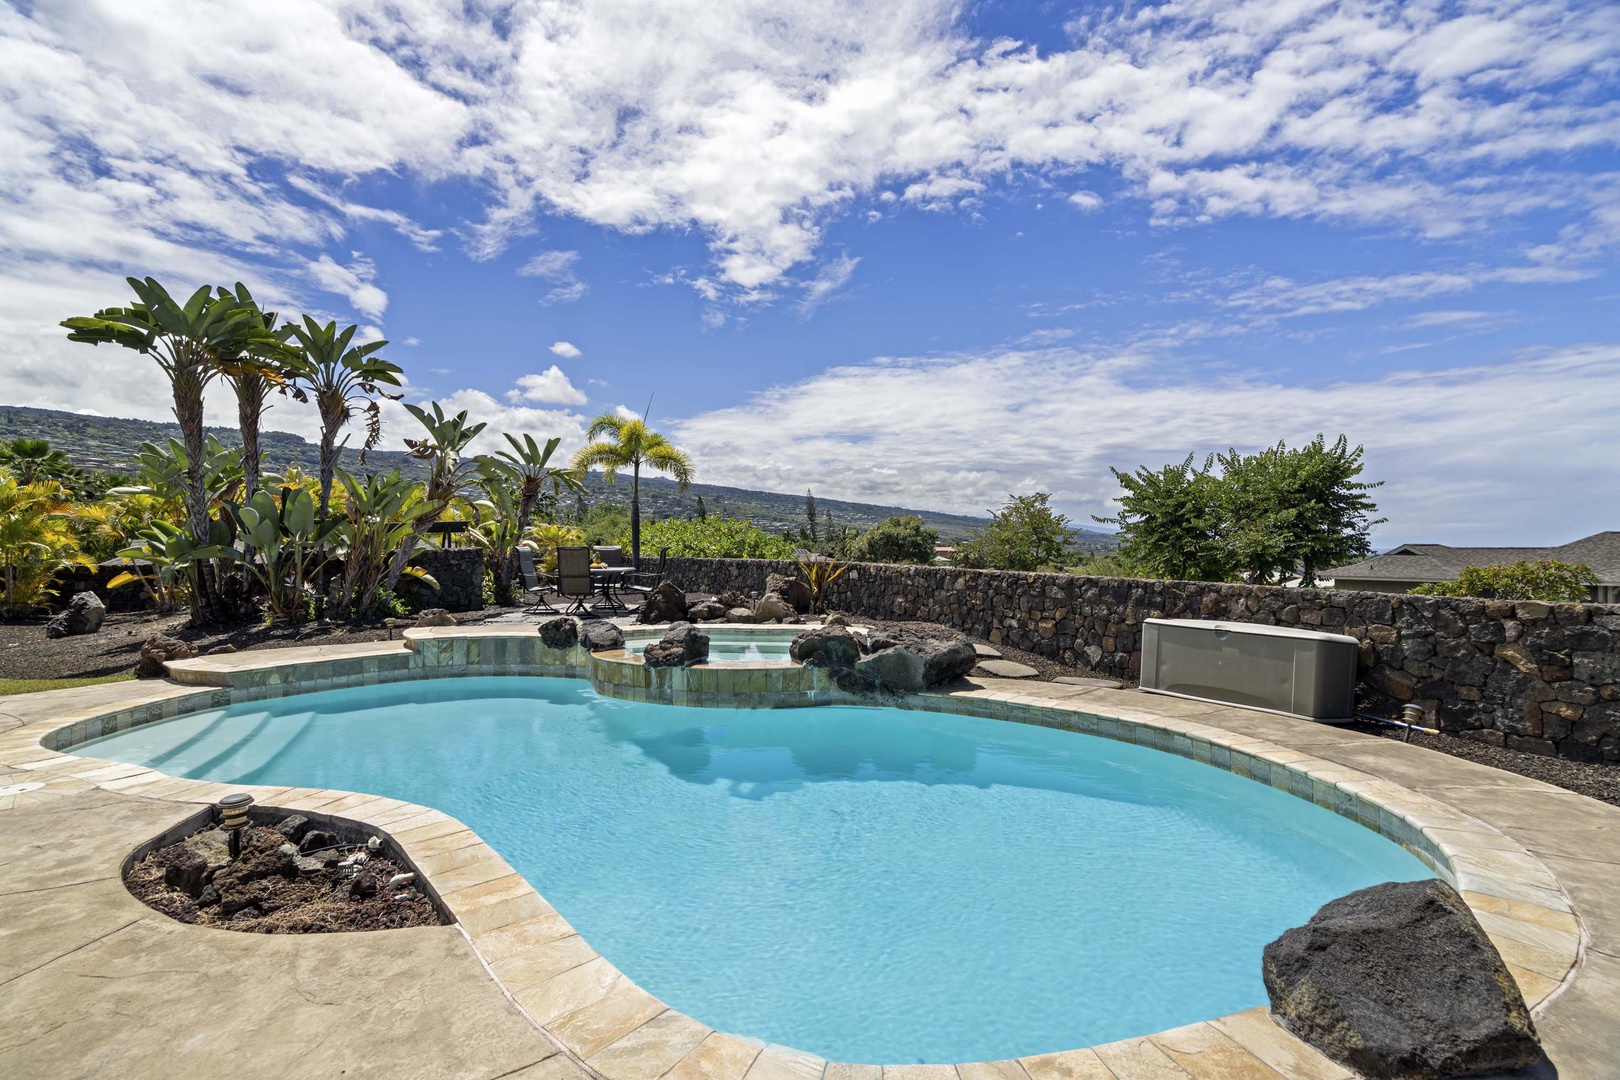 Kailua Kona Vacation Rentals, Kahakai Estates Hale - Take a dip under the Hawaiian sun.